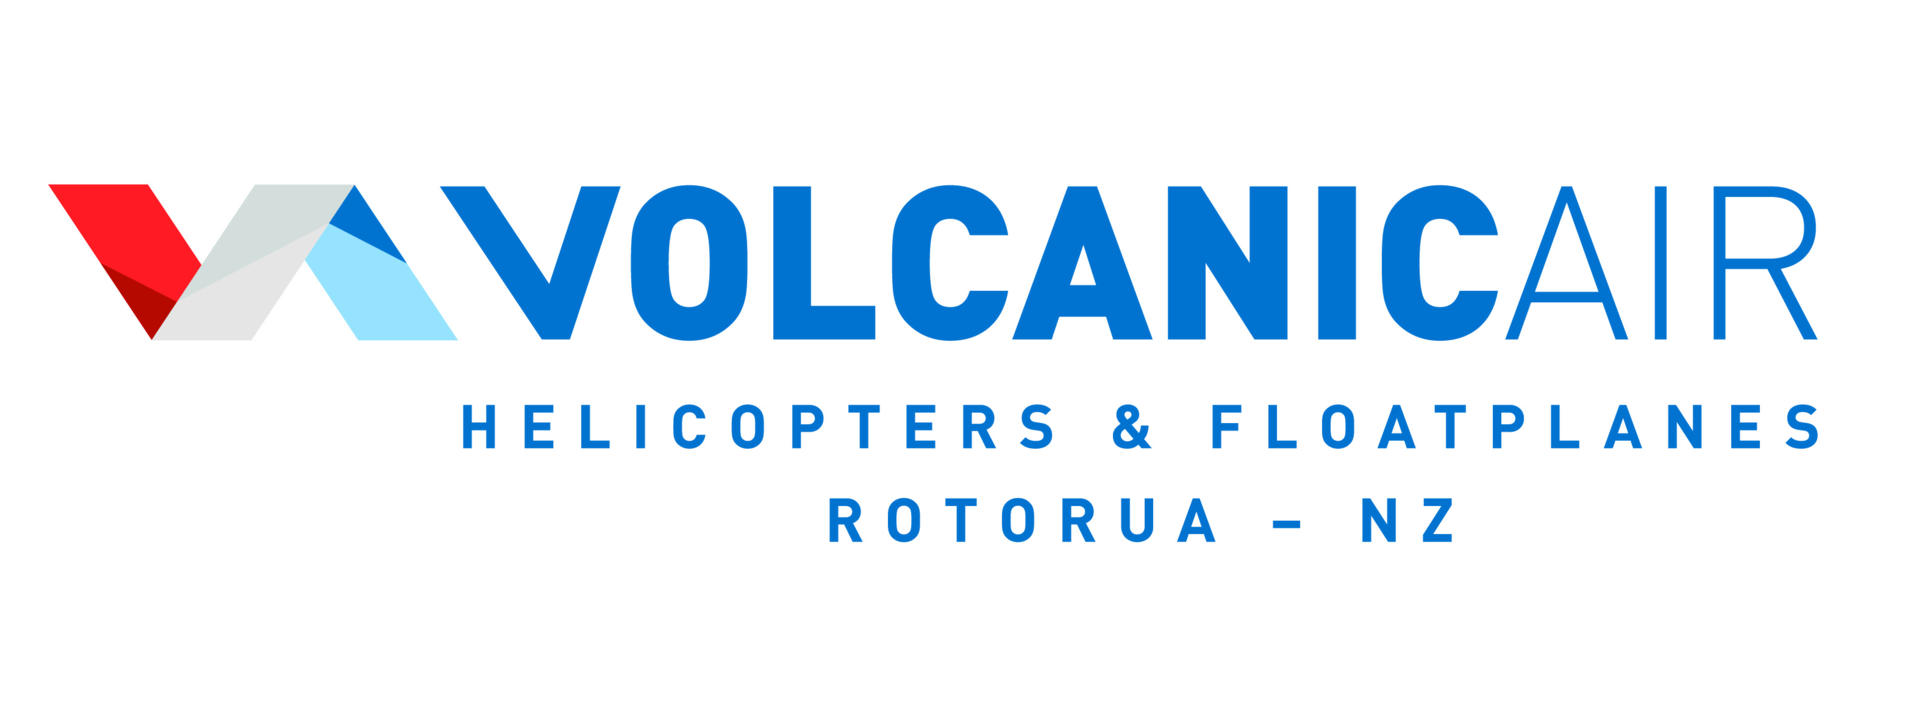 Volcanic Air